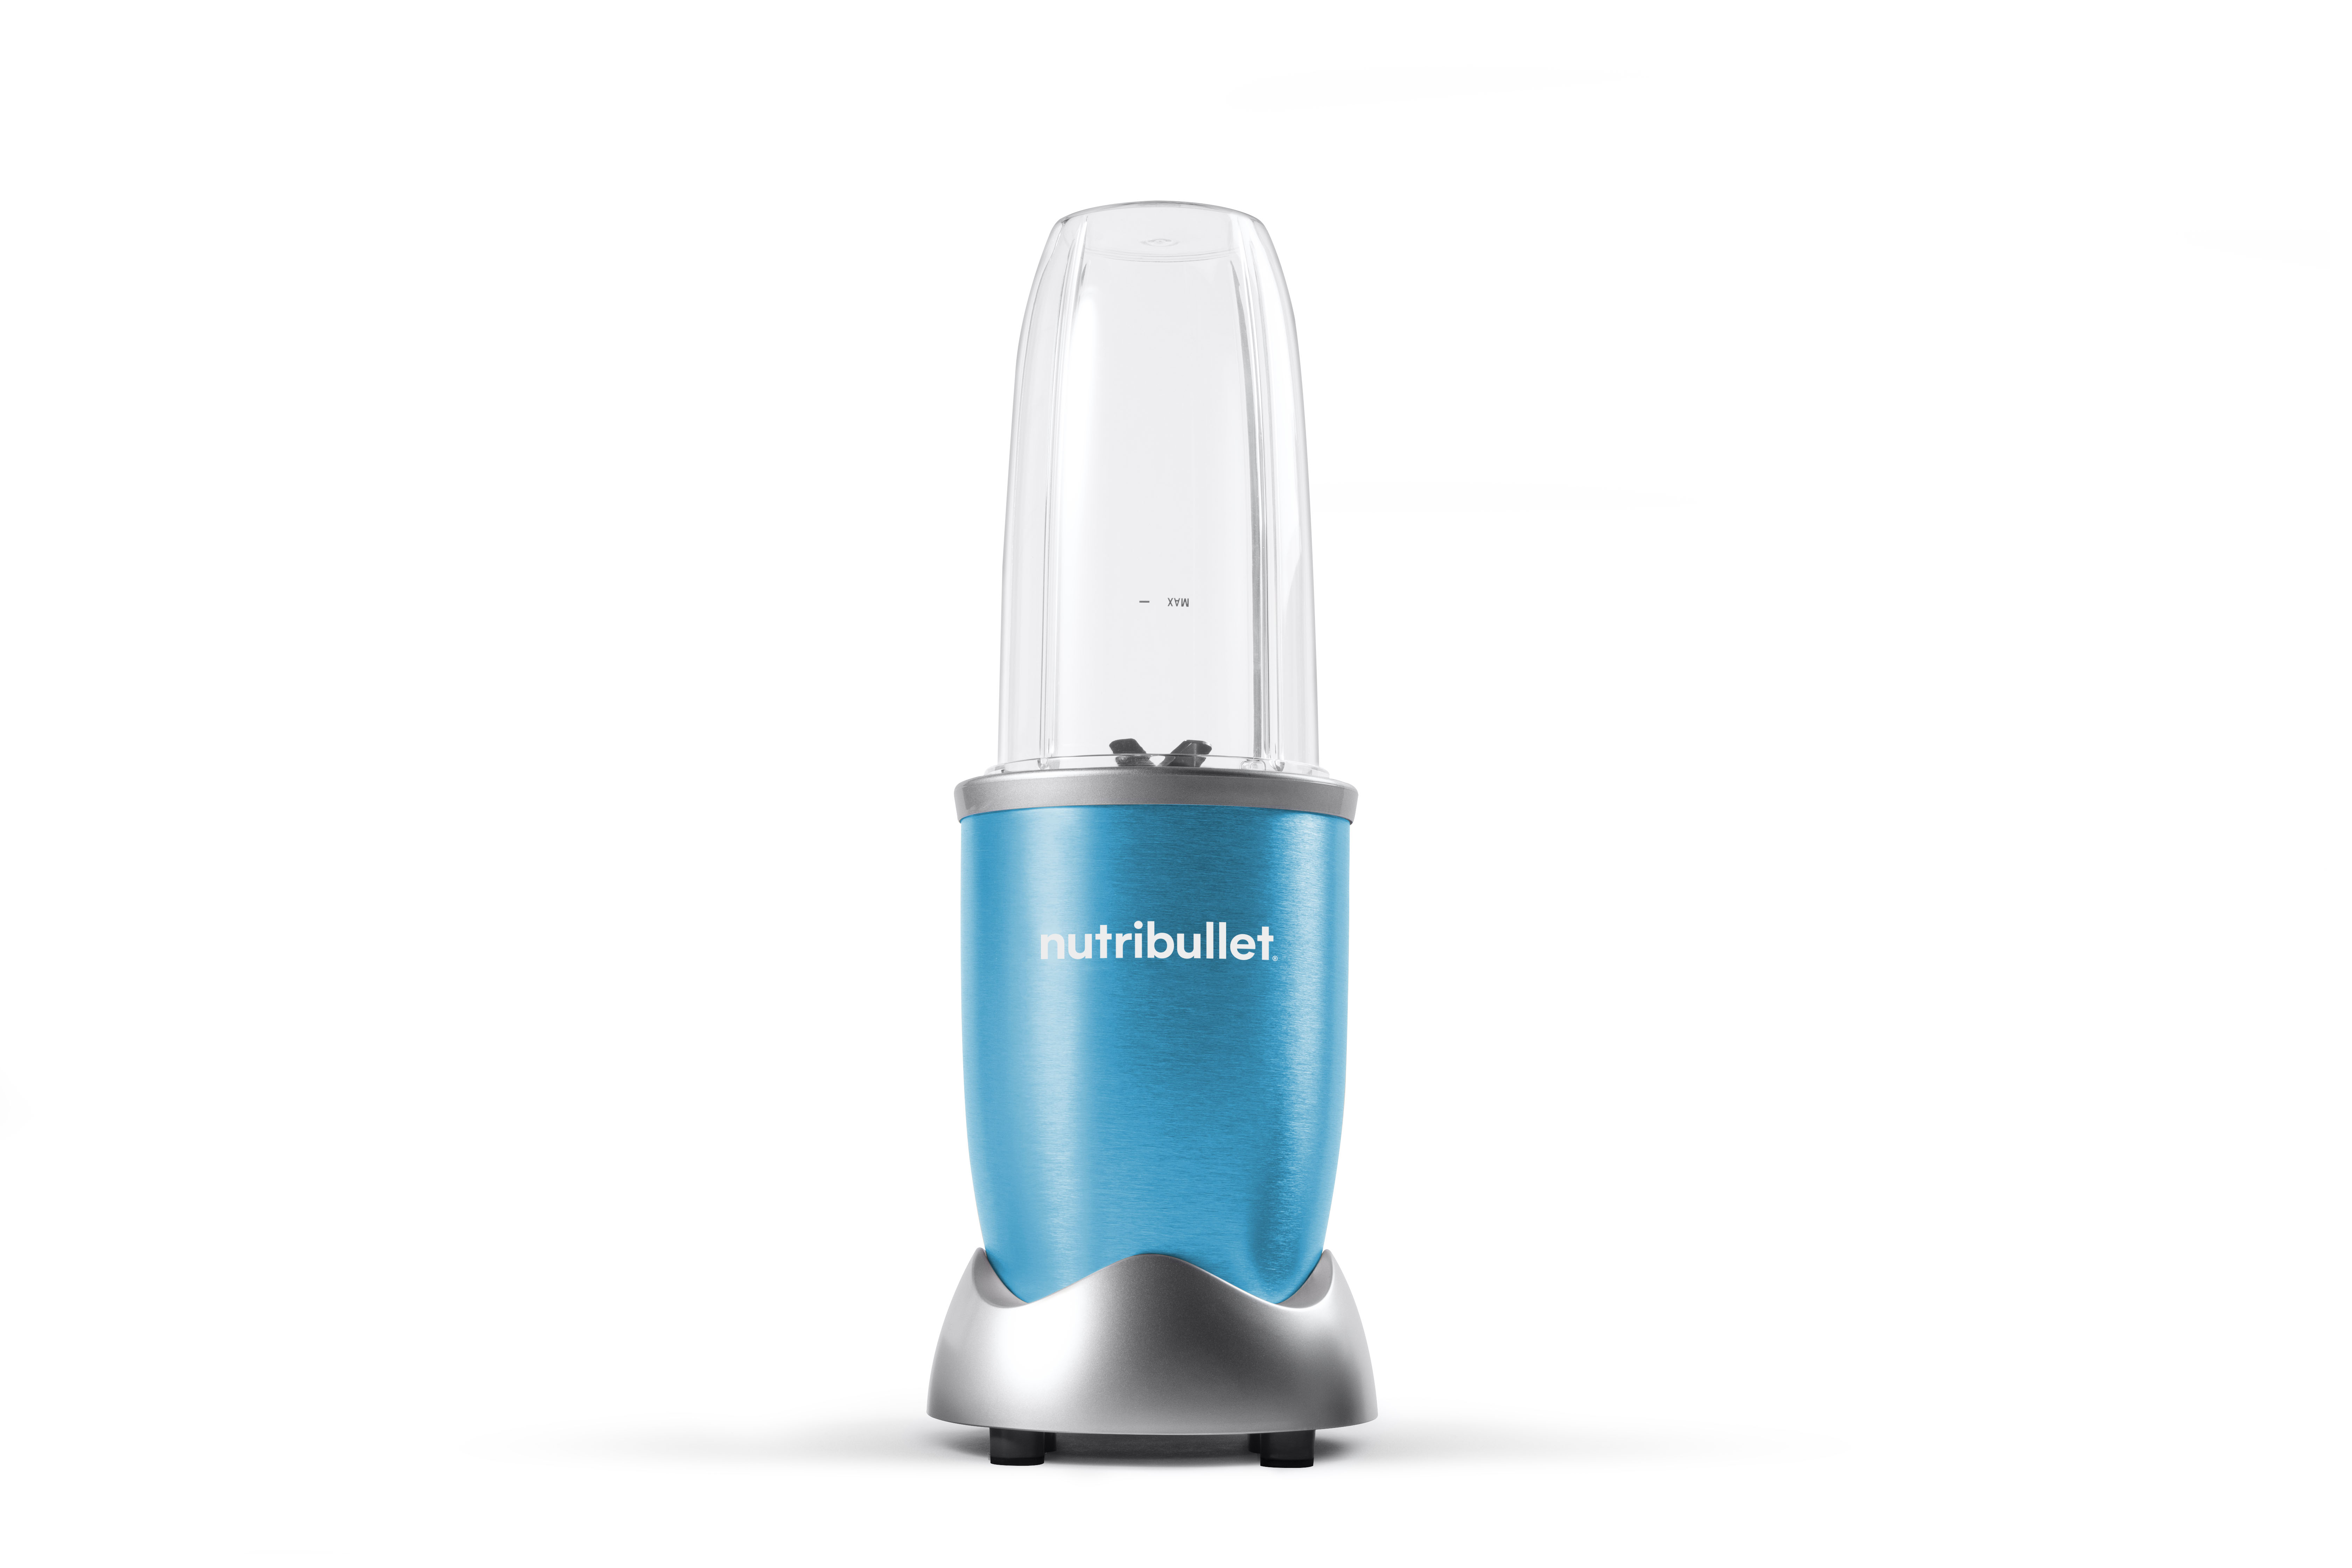 nutriBullet Pro 32 oz. 900 Watts Personal Blender - Teal - image 1 of 3